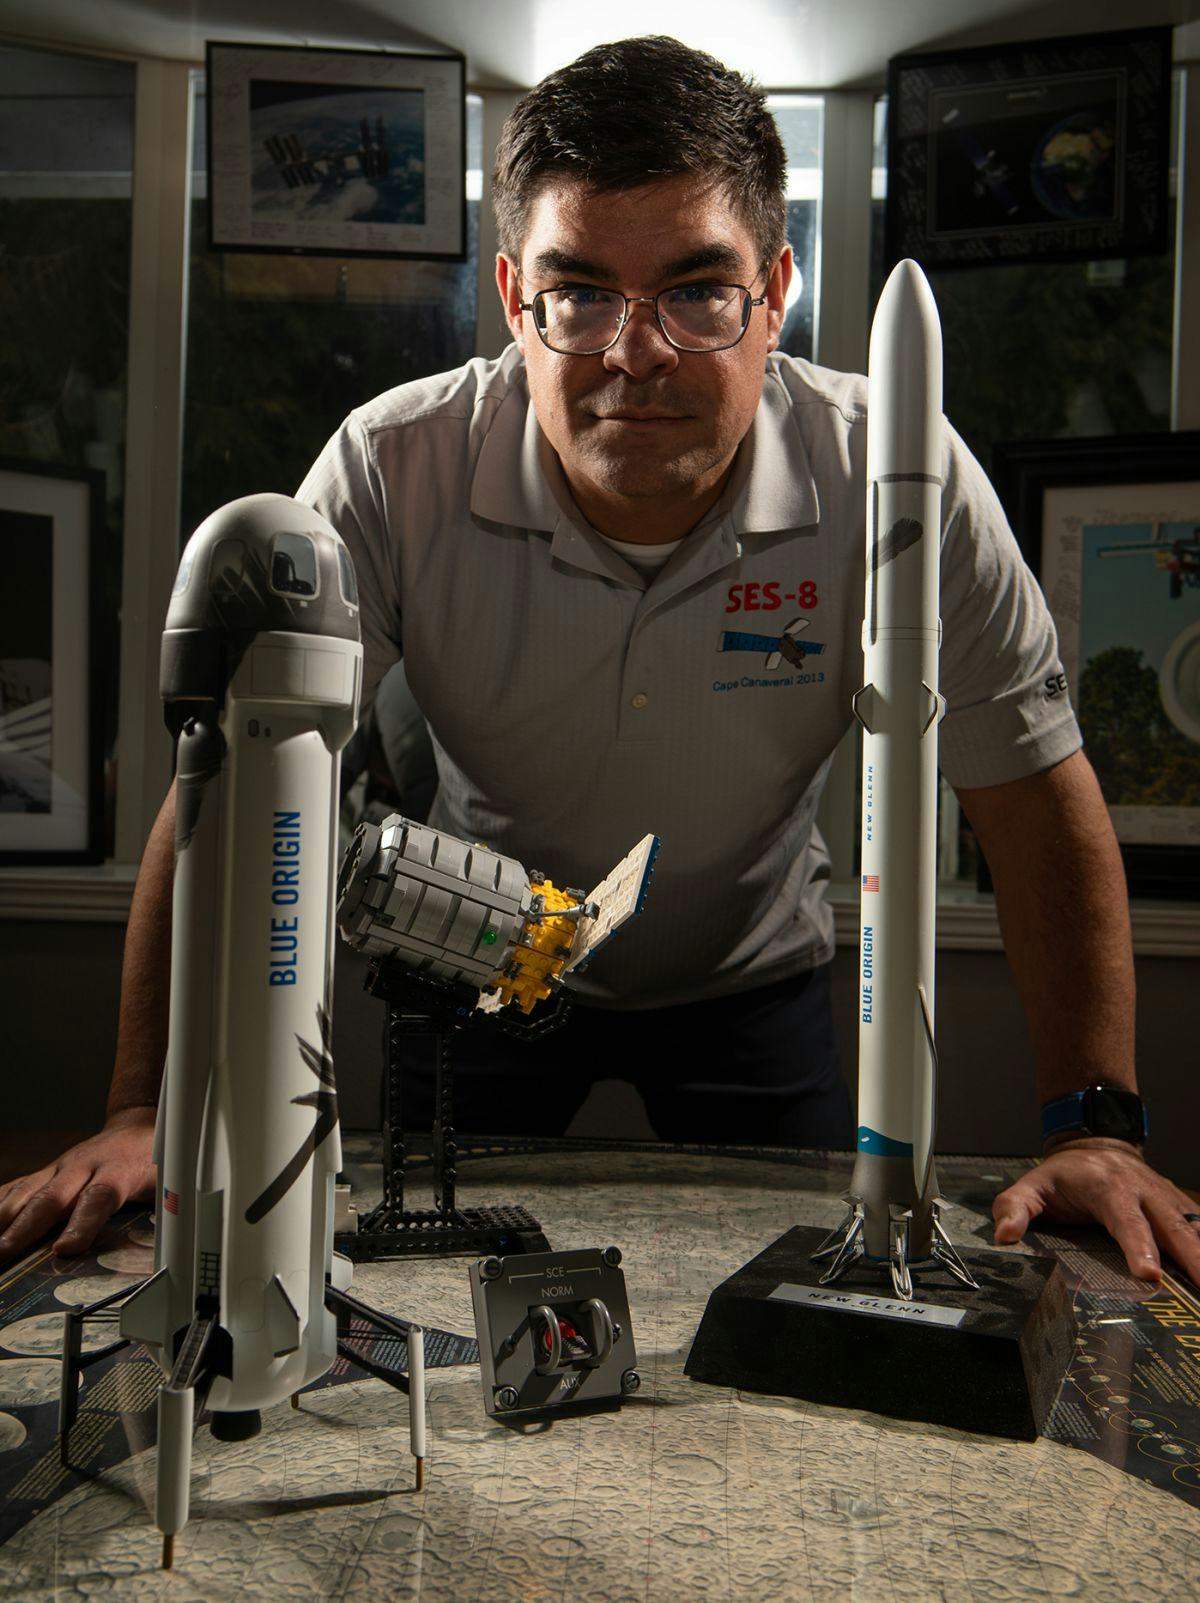 Portrait of Jonathan Matos with model rockets